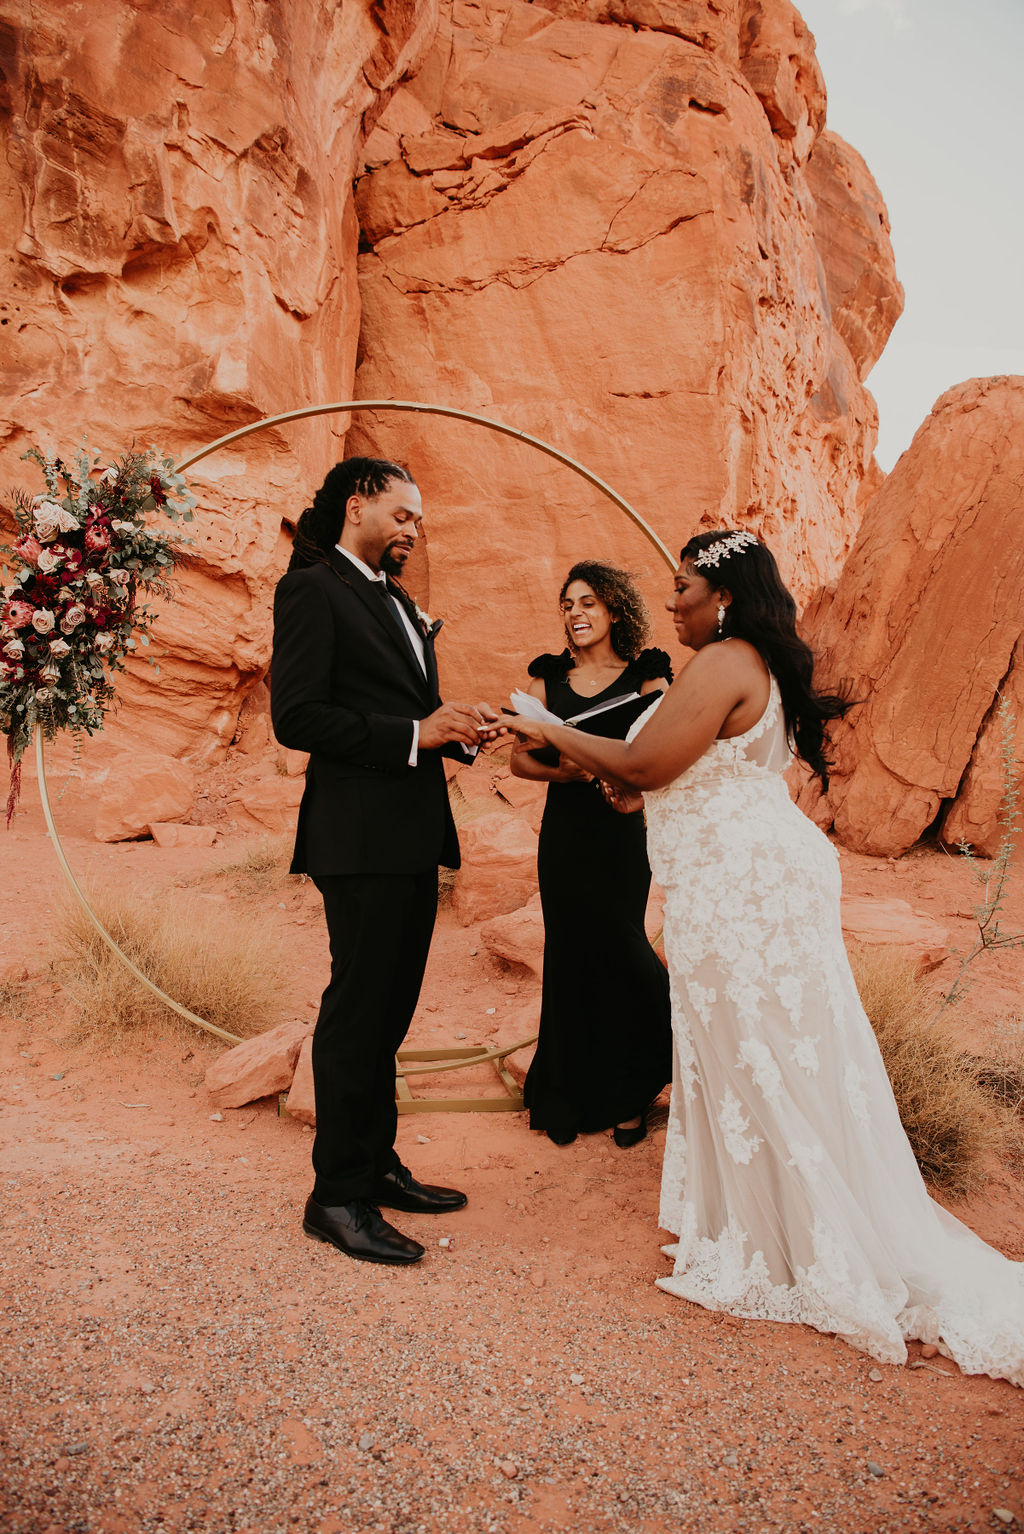 Groom putting Ring of Bride During Elopement Ceremony in Las Vegas 